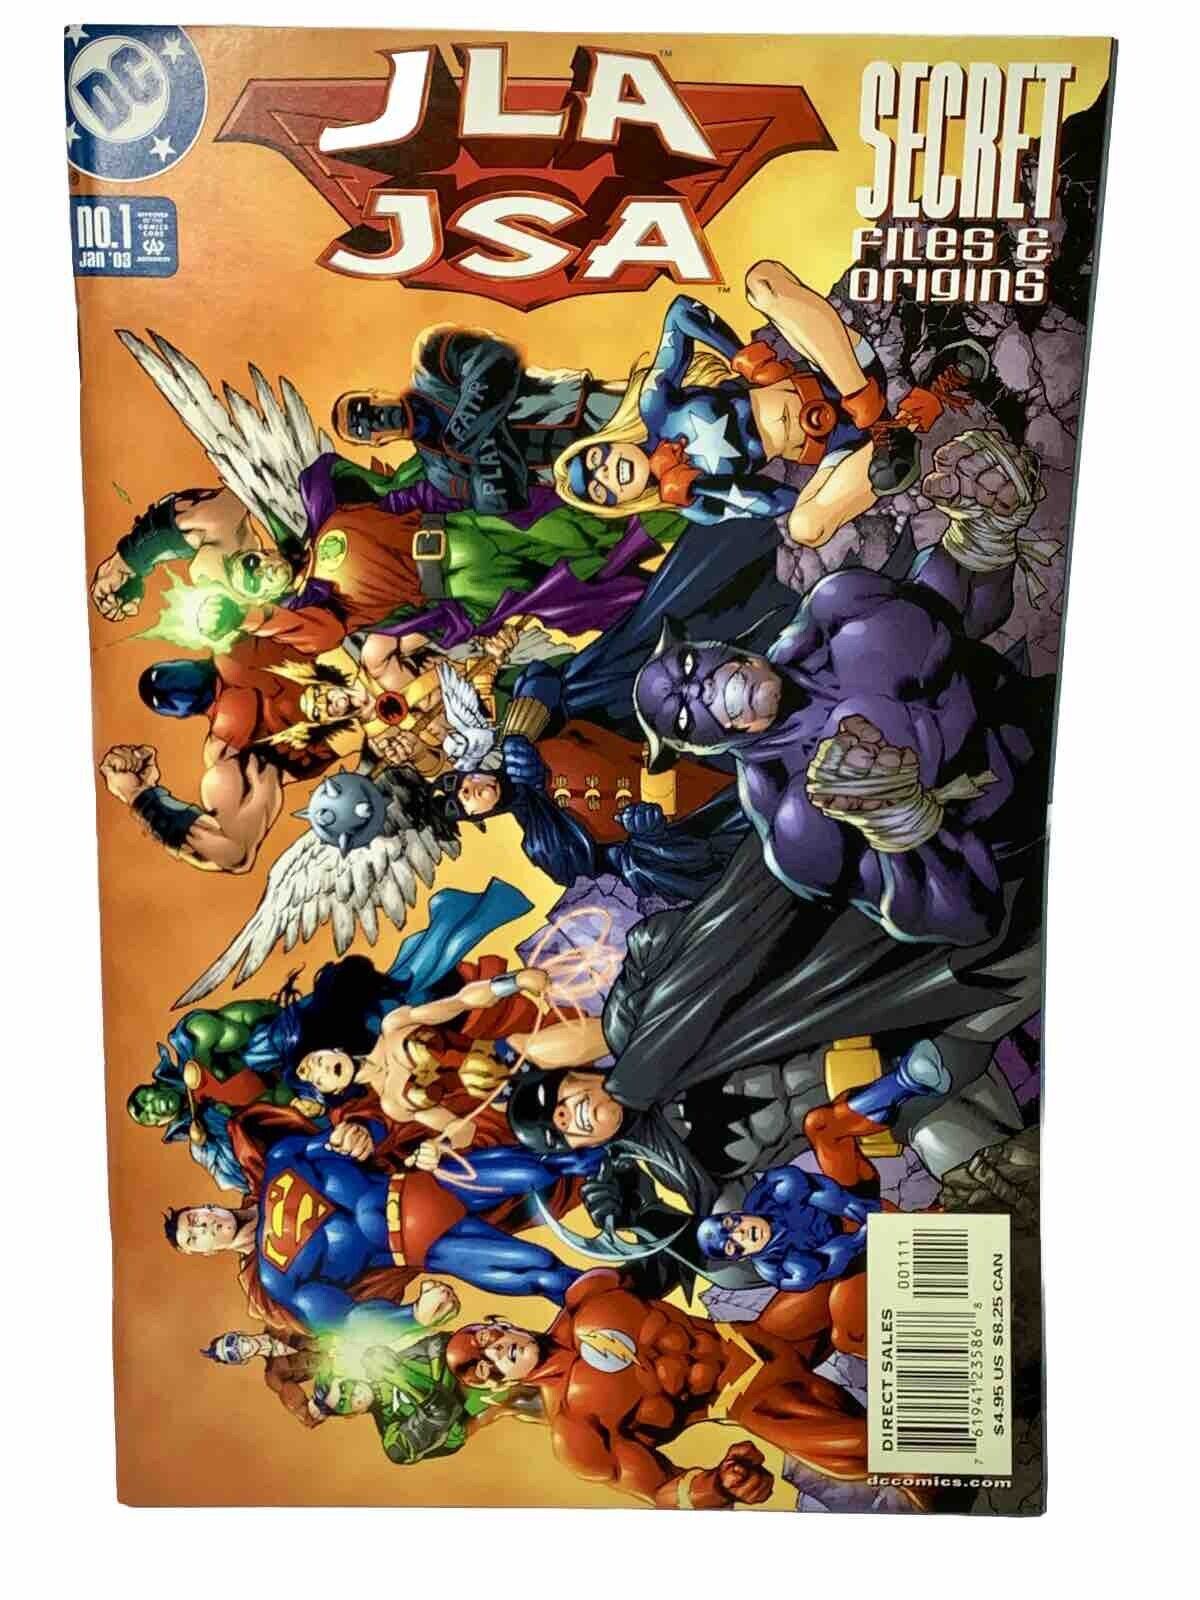 JLA/JSA: Secret Files & Origins- Issue #1 (DC Comics, JAN. 2003)  Justice League